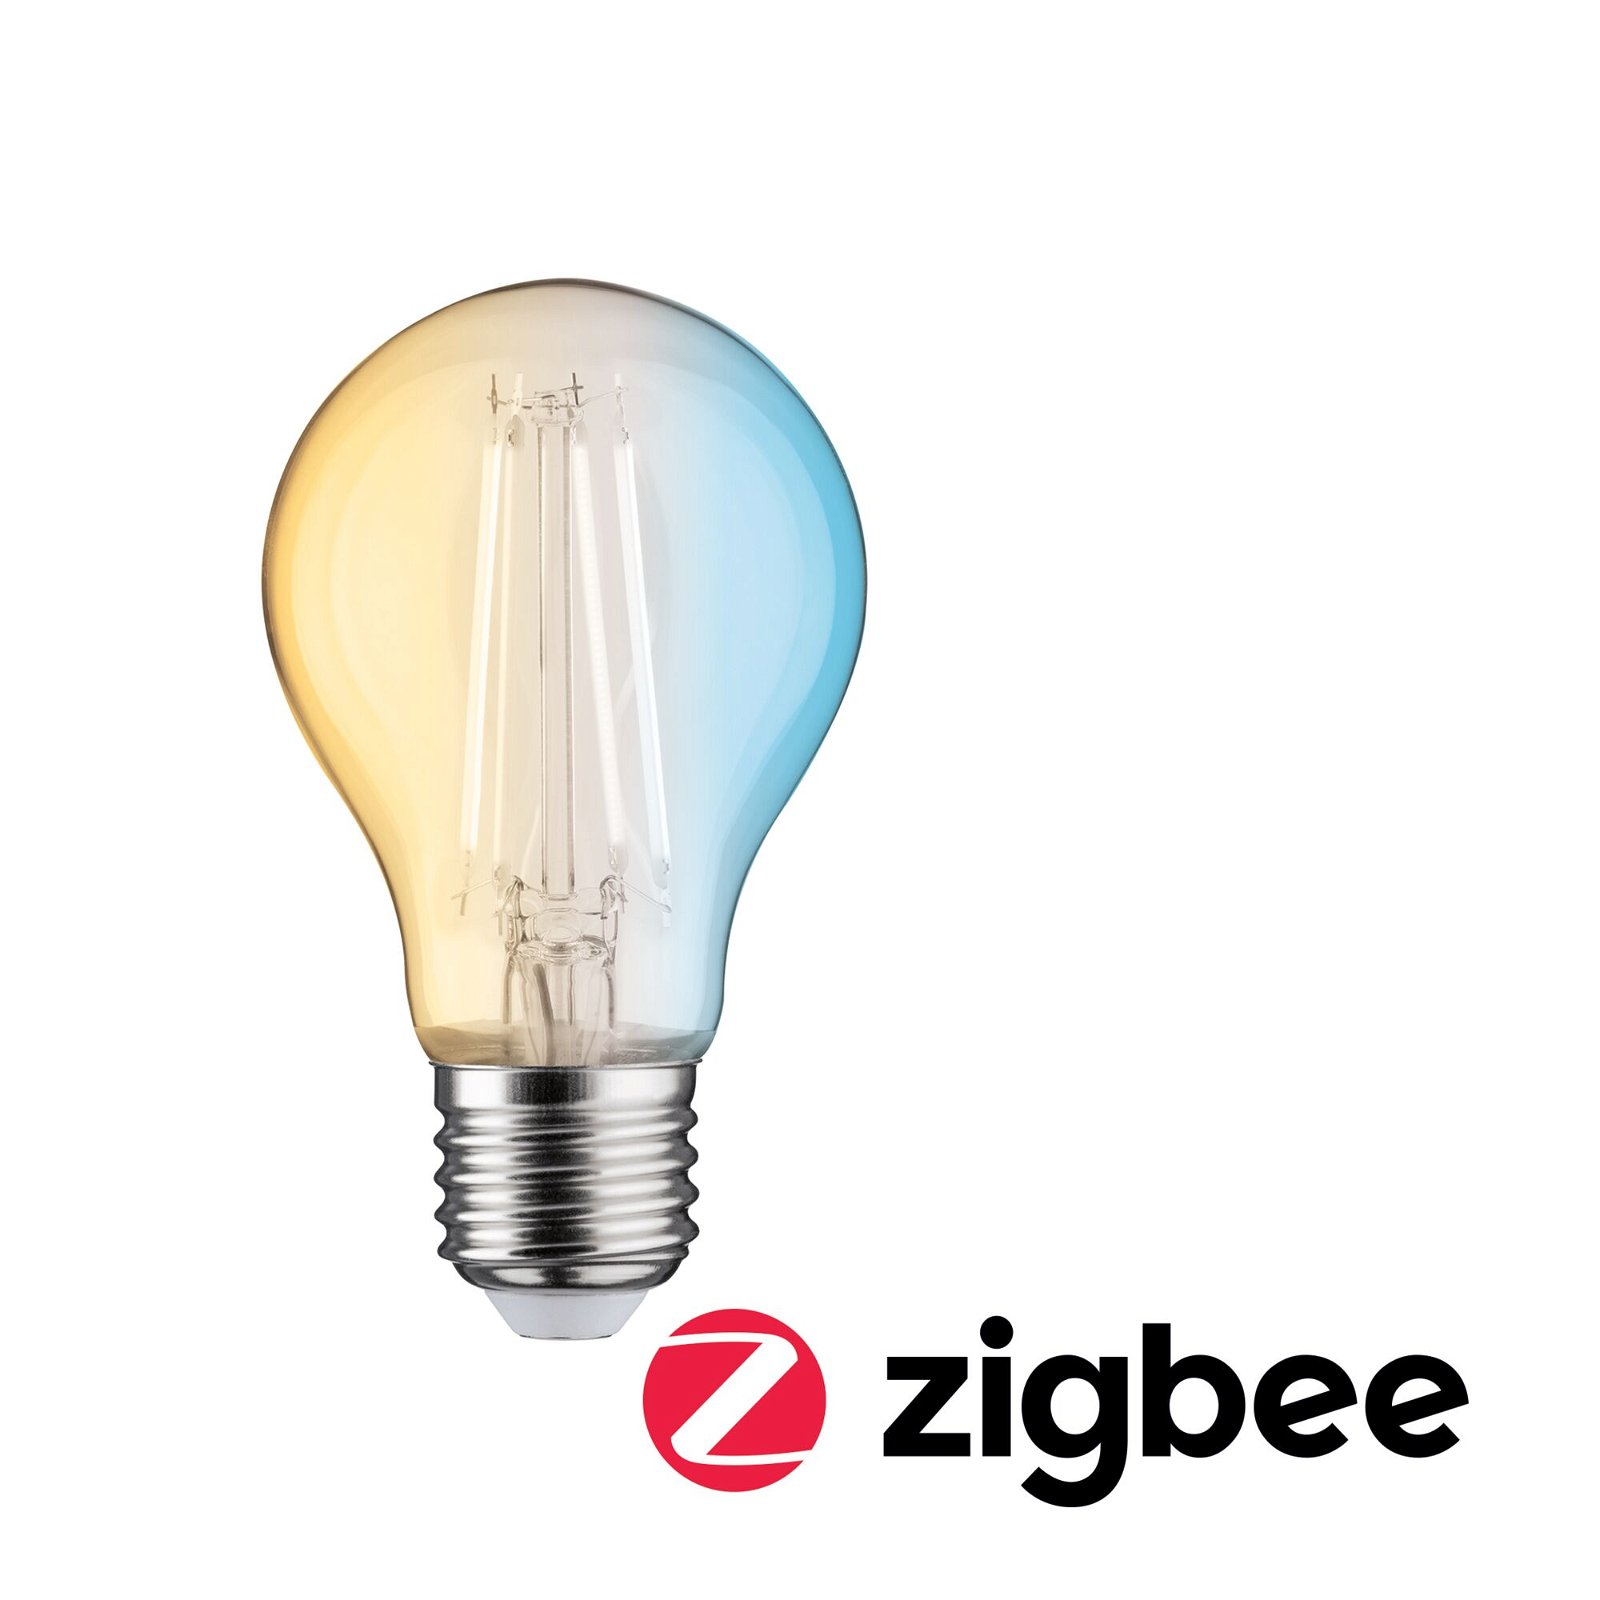 Preisattraktives Starterset Zigbee 3.0 Smart Home smik Gateway + Filament 230V LED Birne E27 + Wandtaster